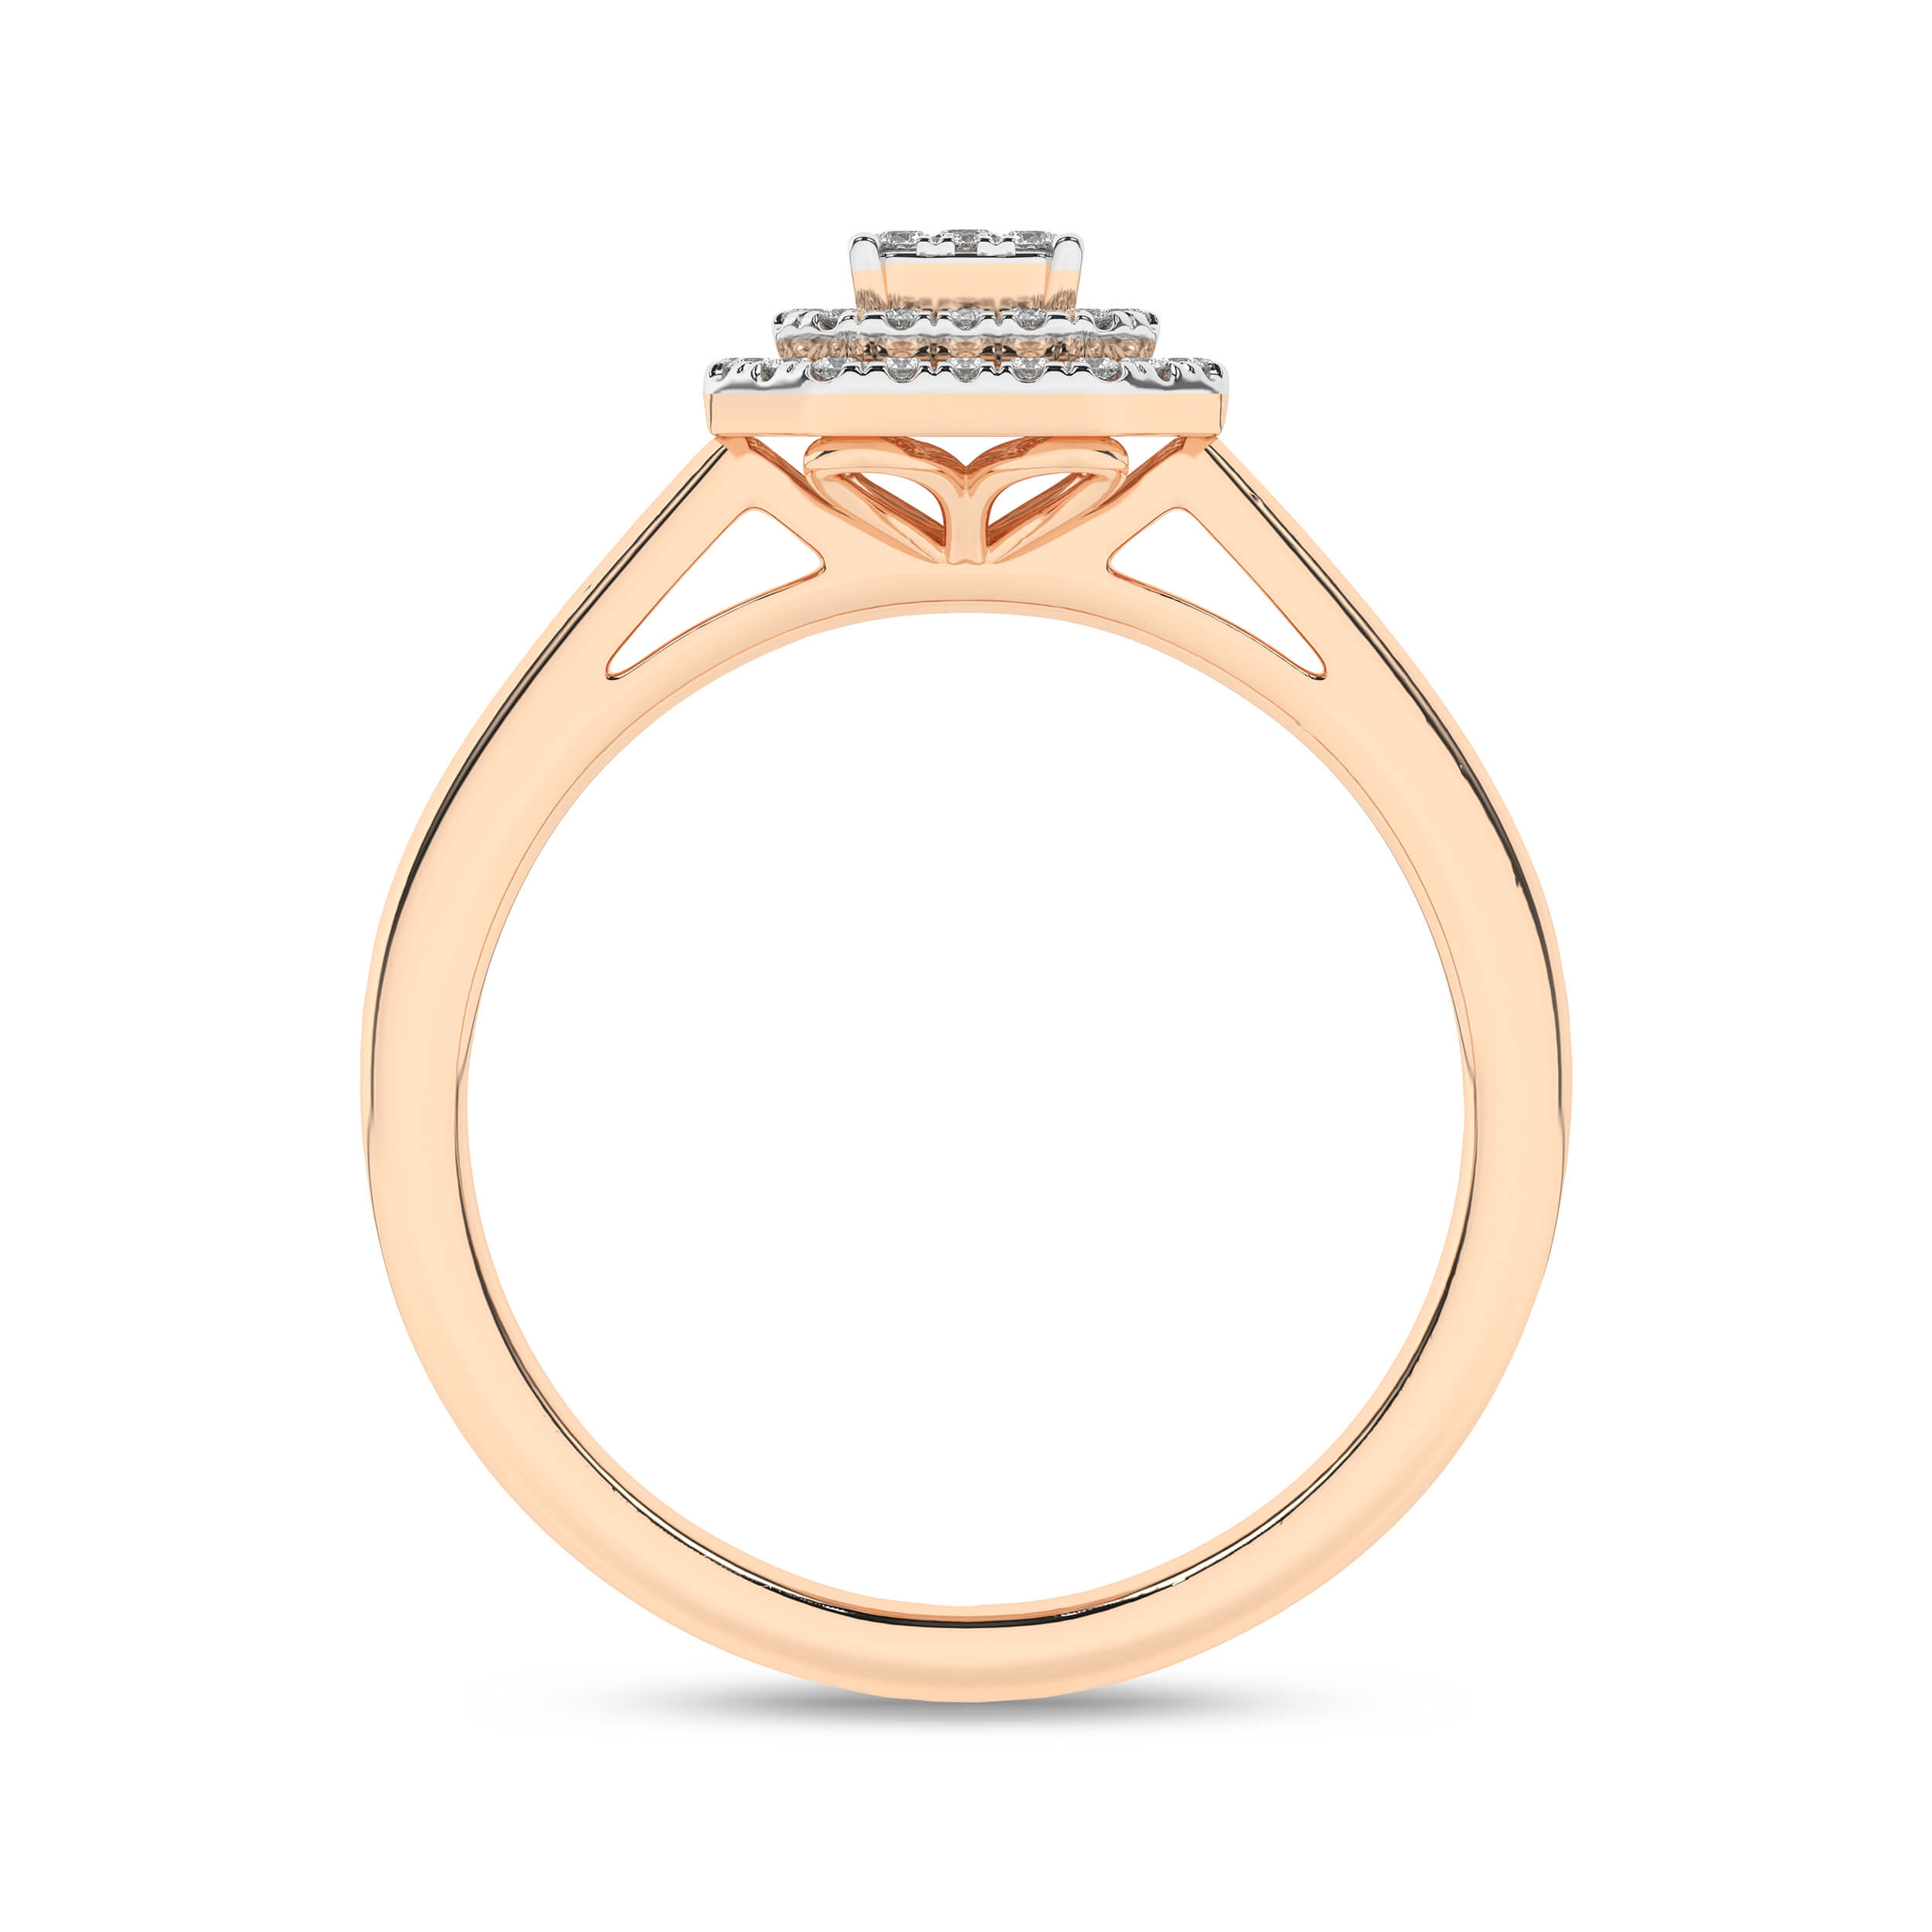 Inel din Aur Roz 18K cu Diamante 0.22Ct, articol RB21240EG, previzualizare foto 2